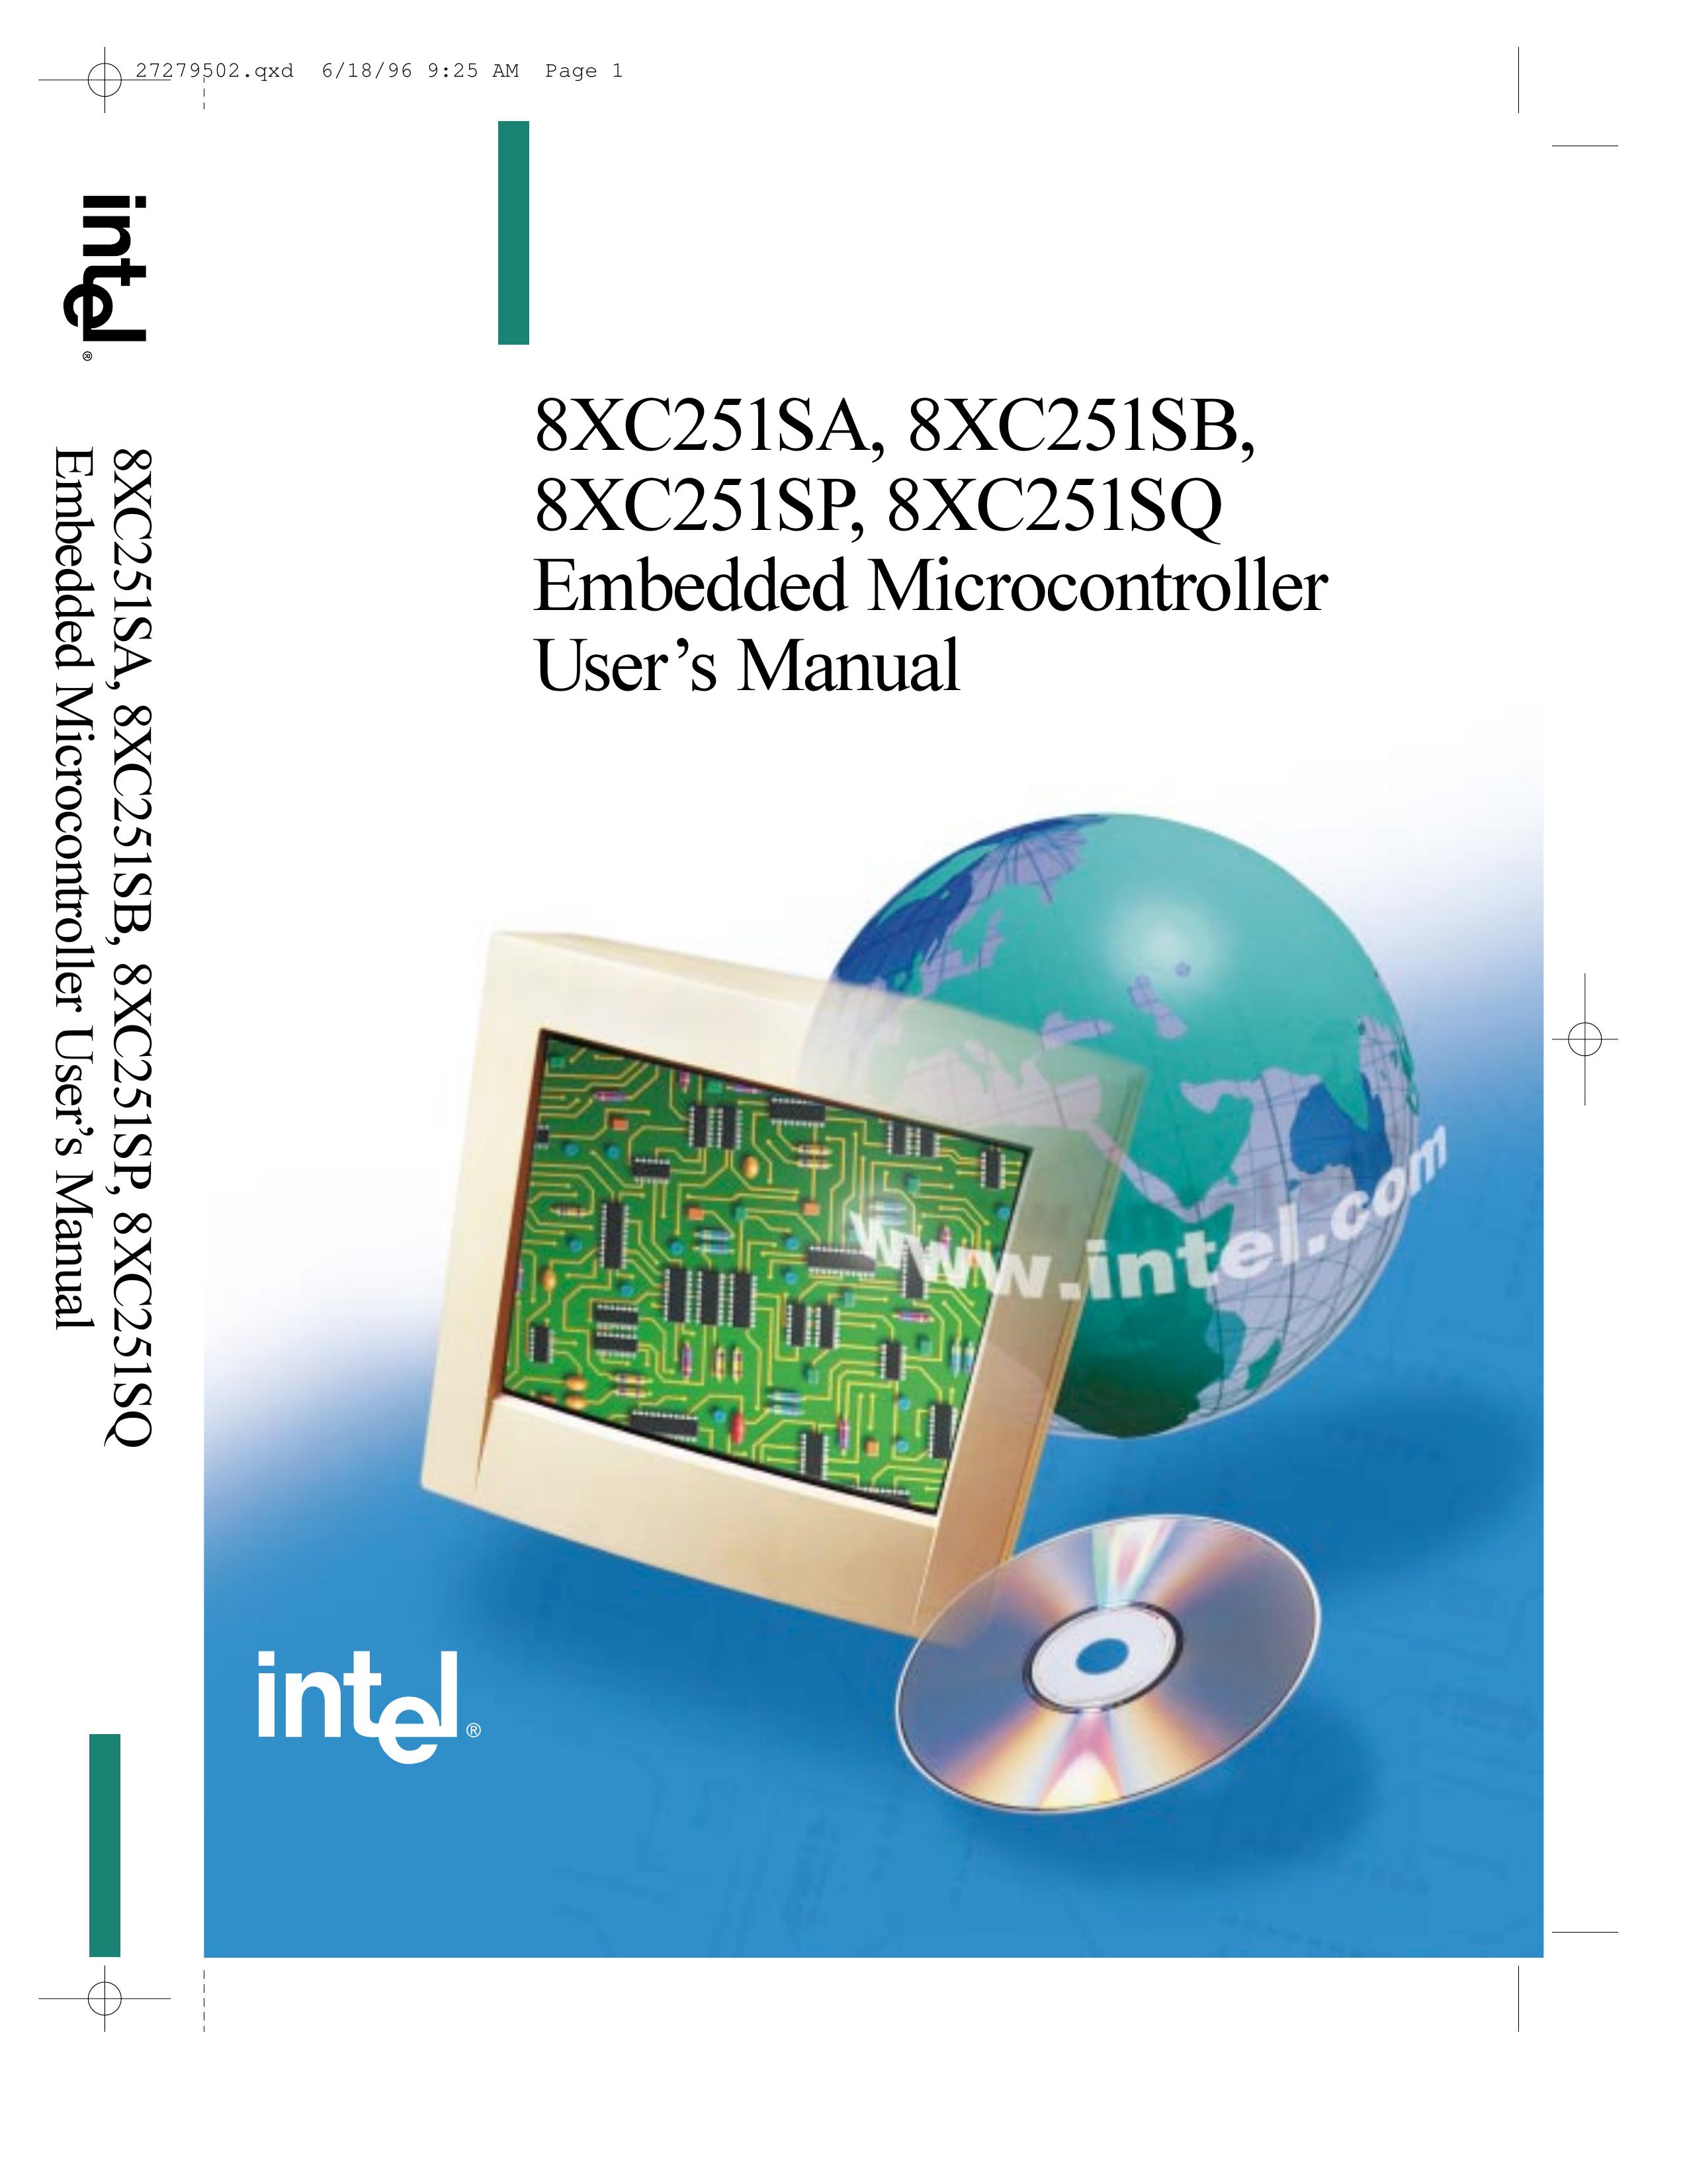 Intel 8XC251SQ Microscope & Magnifier User Manual